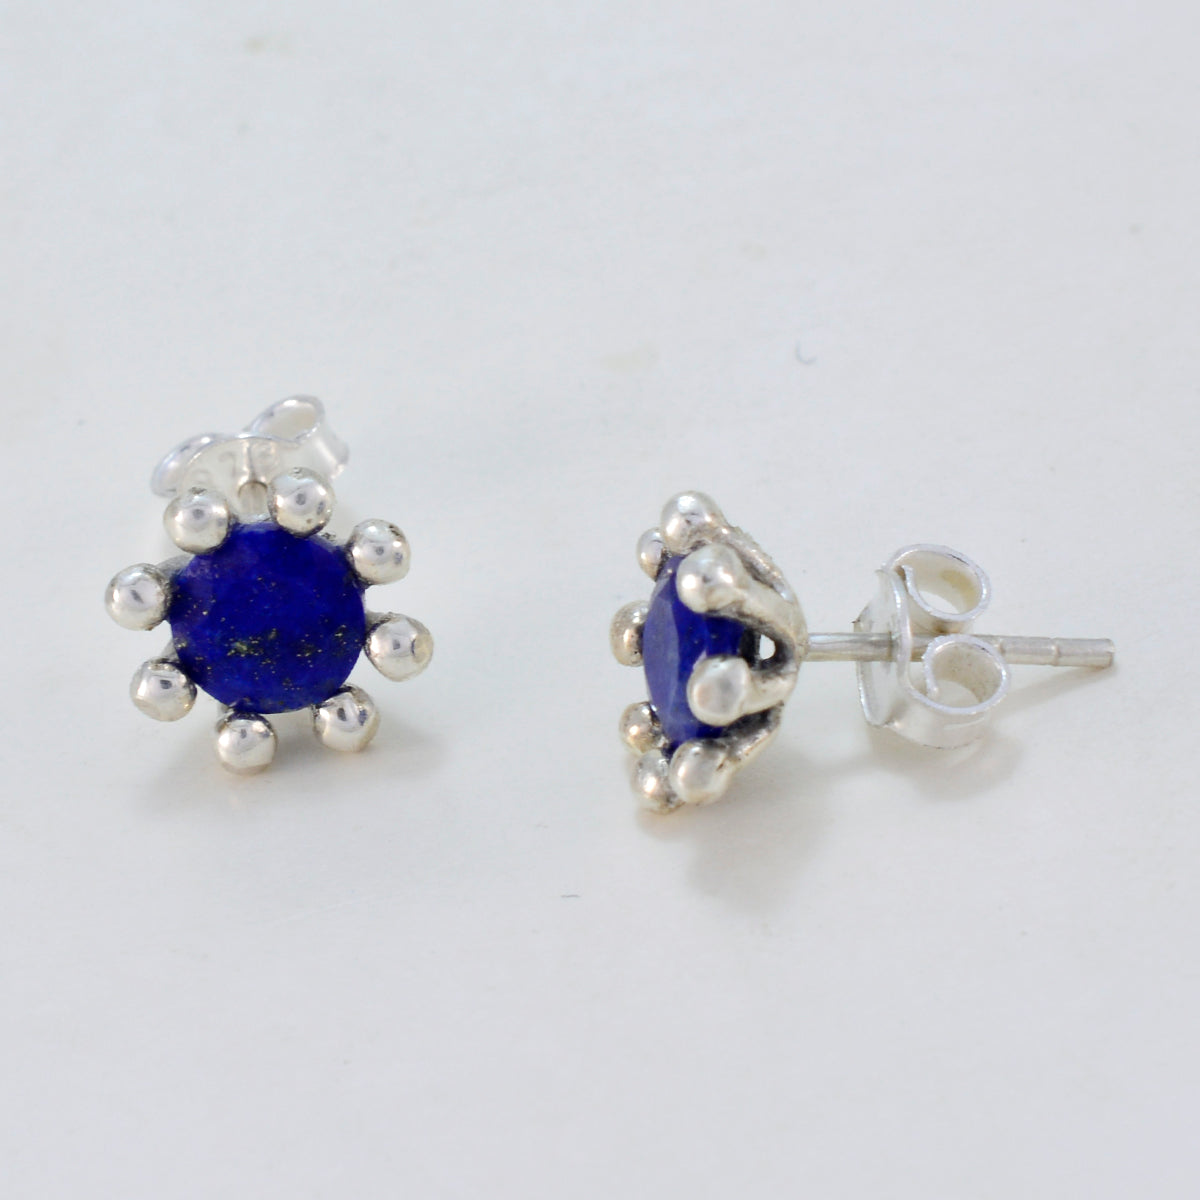 Riyo Good Gemstones round Faceted Nevy Blue Lapis Lazuli Silver Earring b' day gift